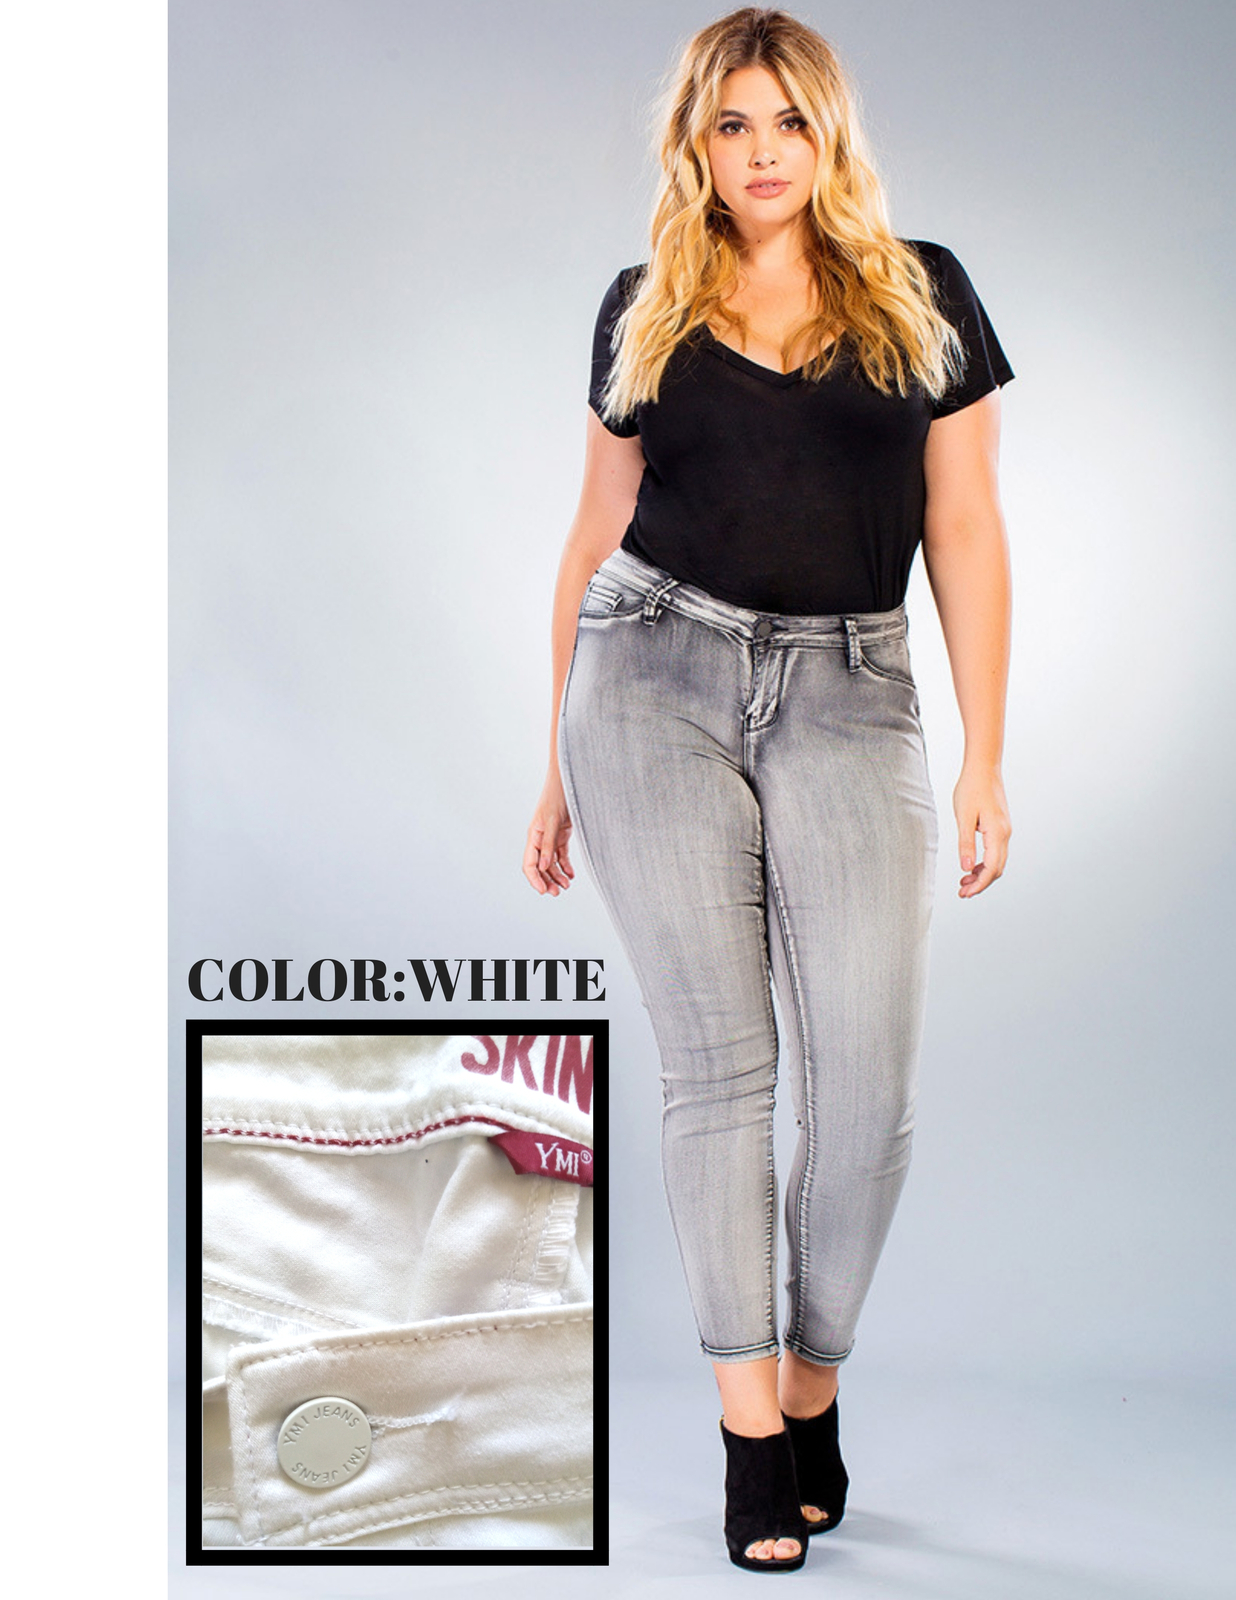 Ymi - Women plus size skinny jeans super soft fabric size 18 white stretchy bottom